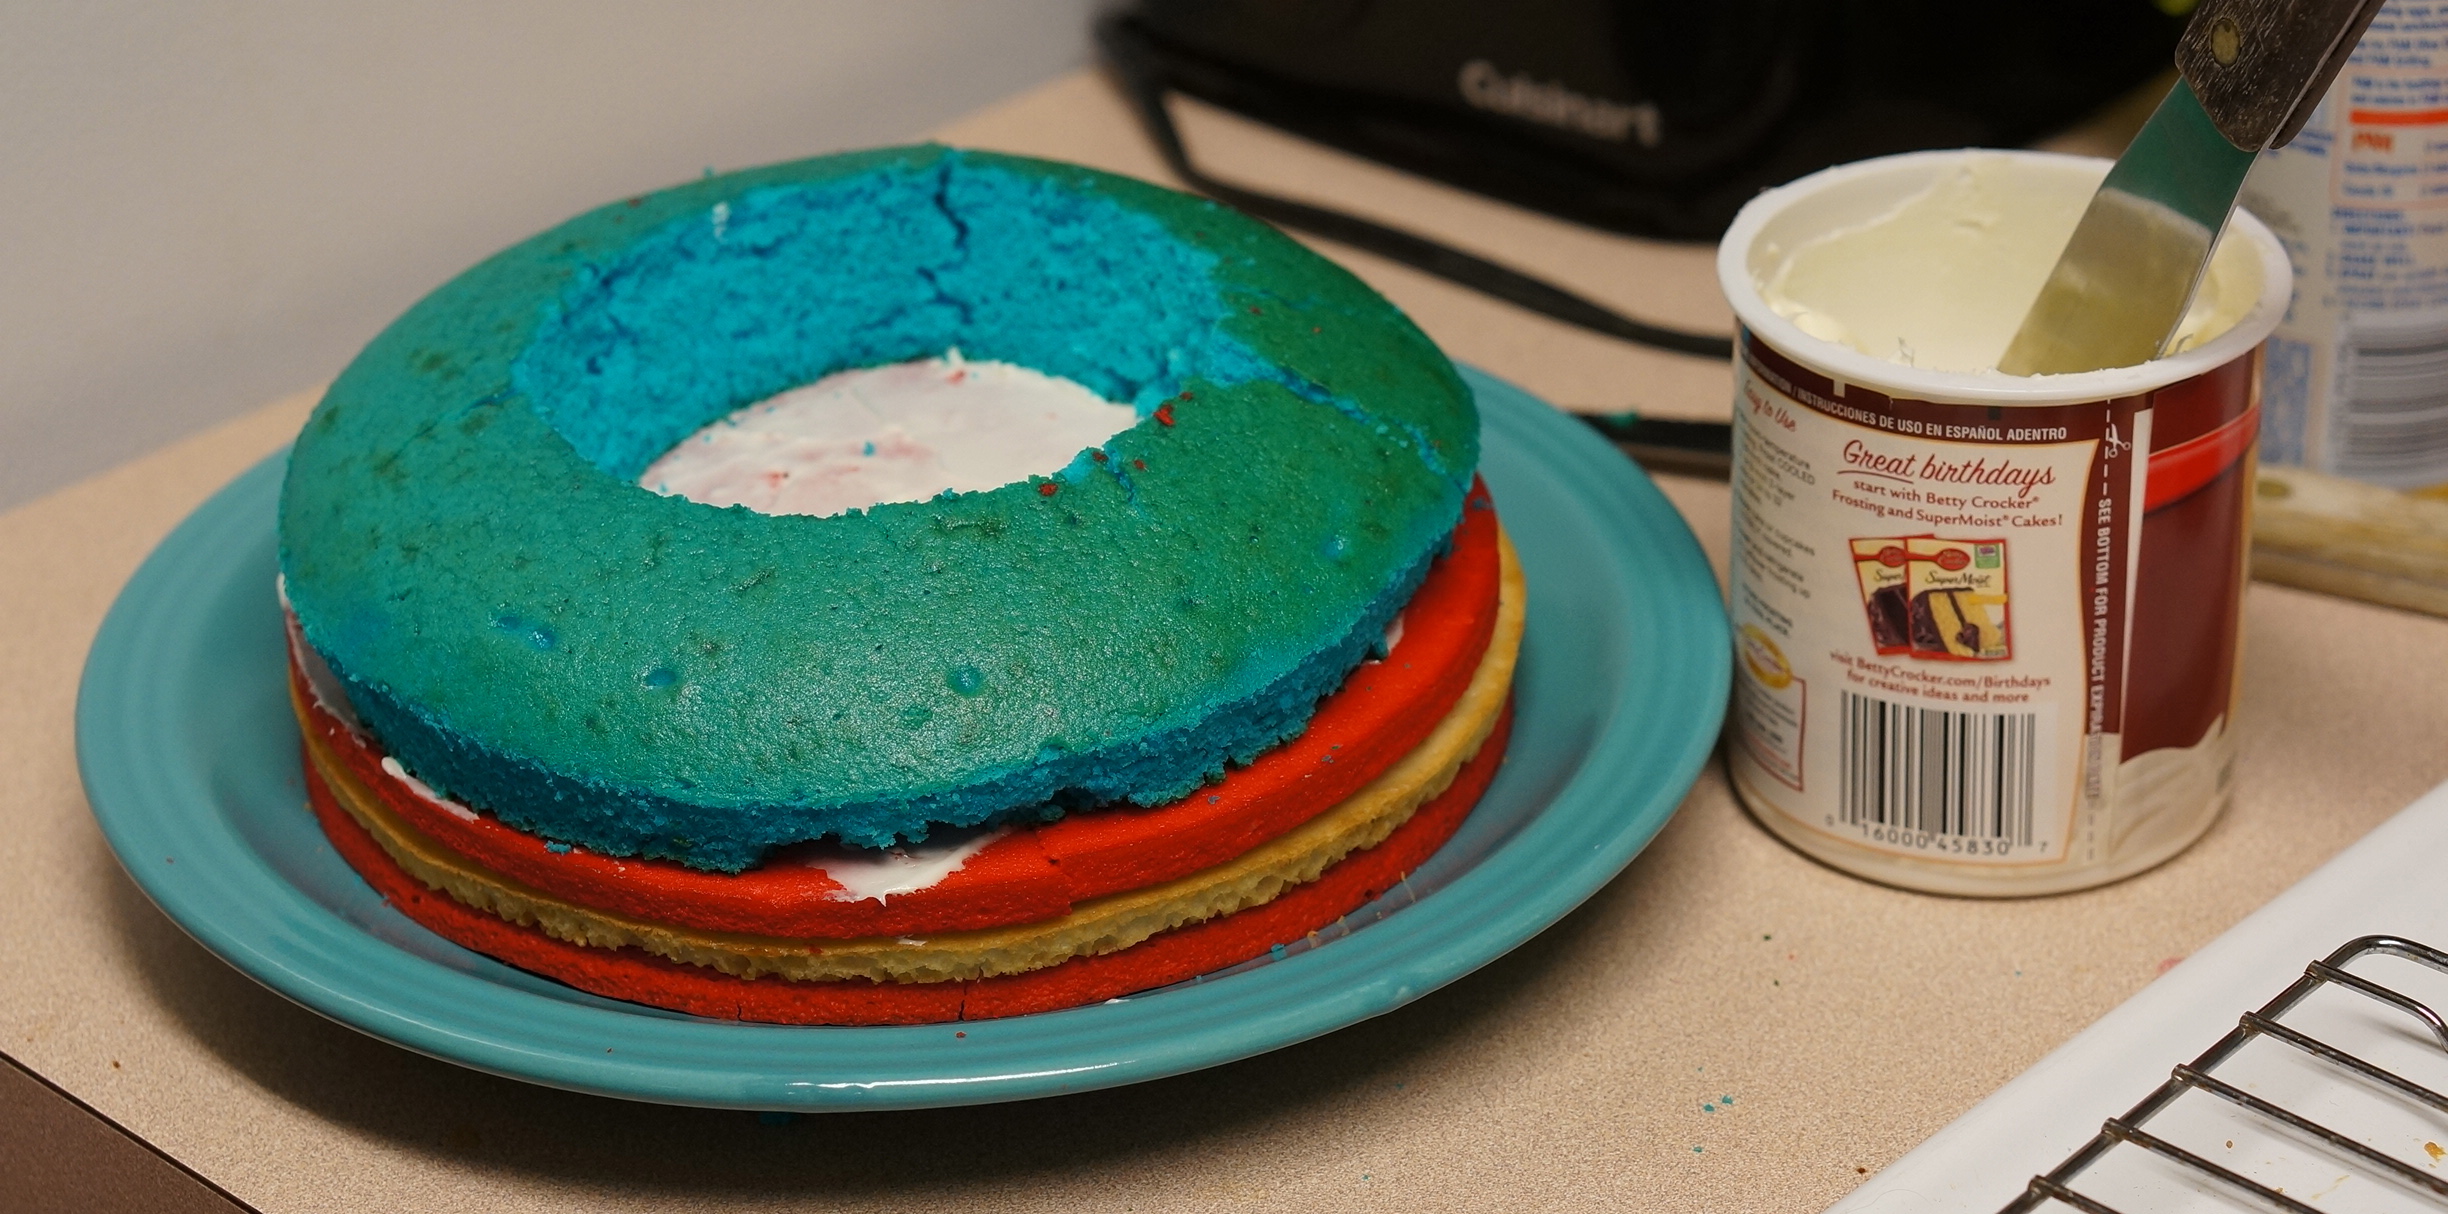 Add-blue-cake-ring